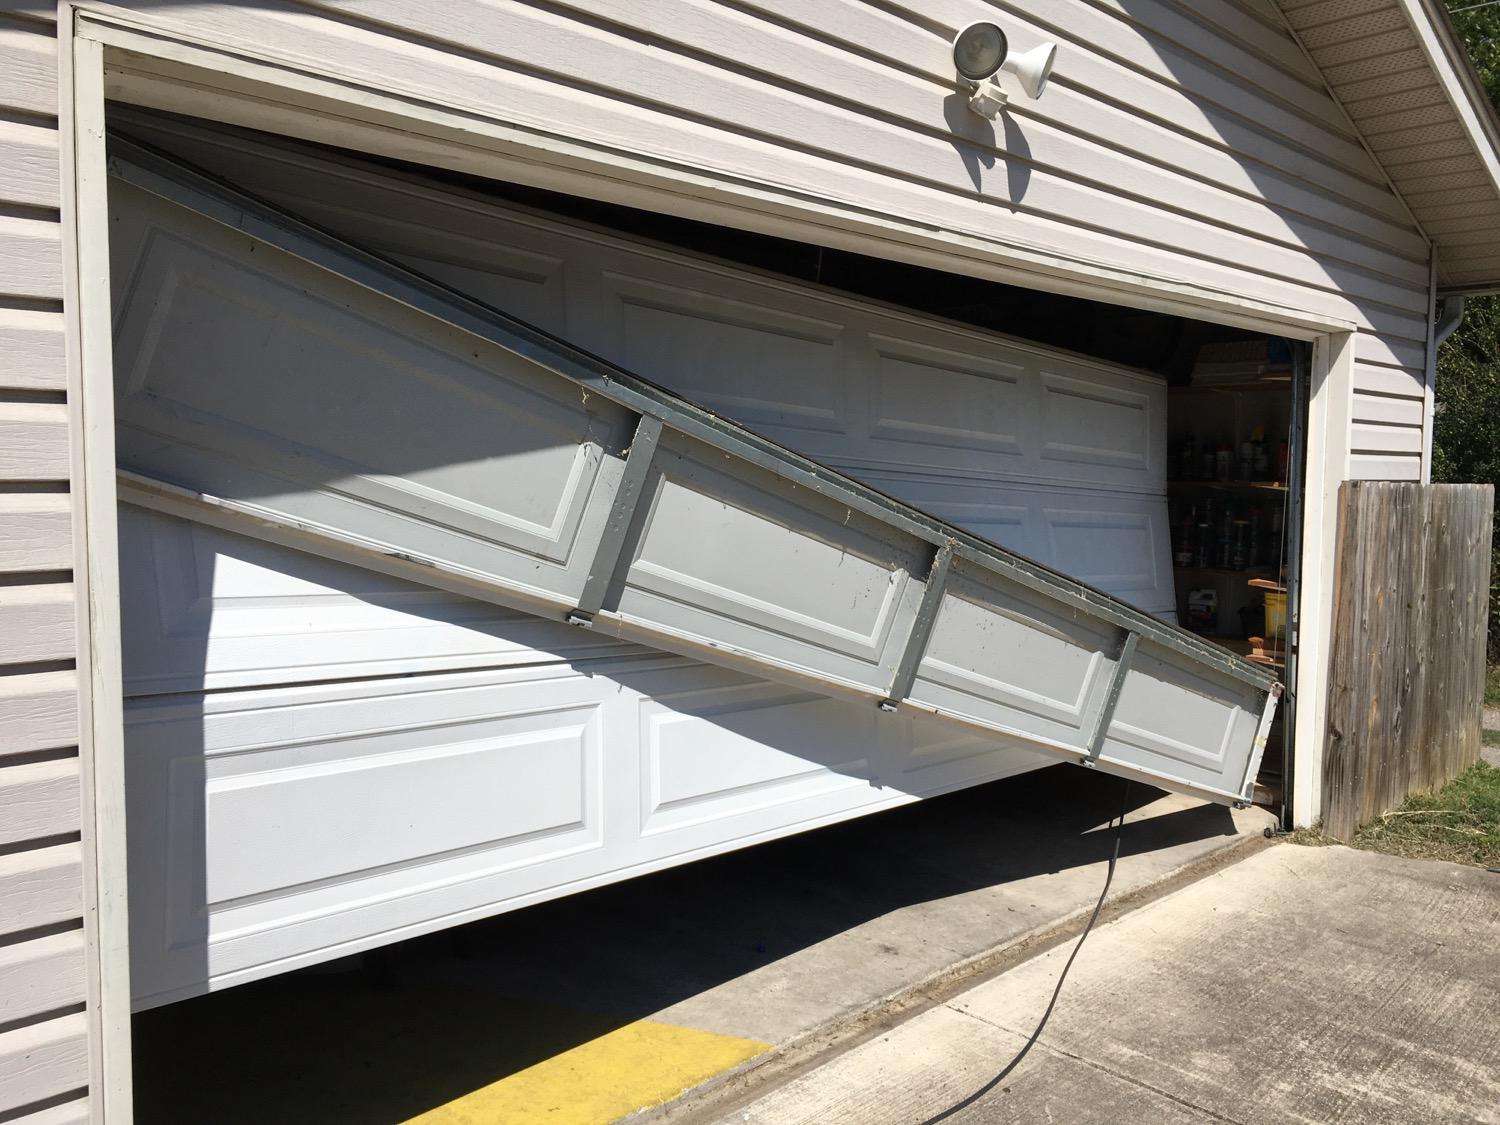 Top section of garage door fell in front of the door. You don't see this very often.